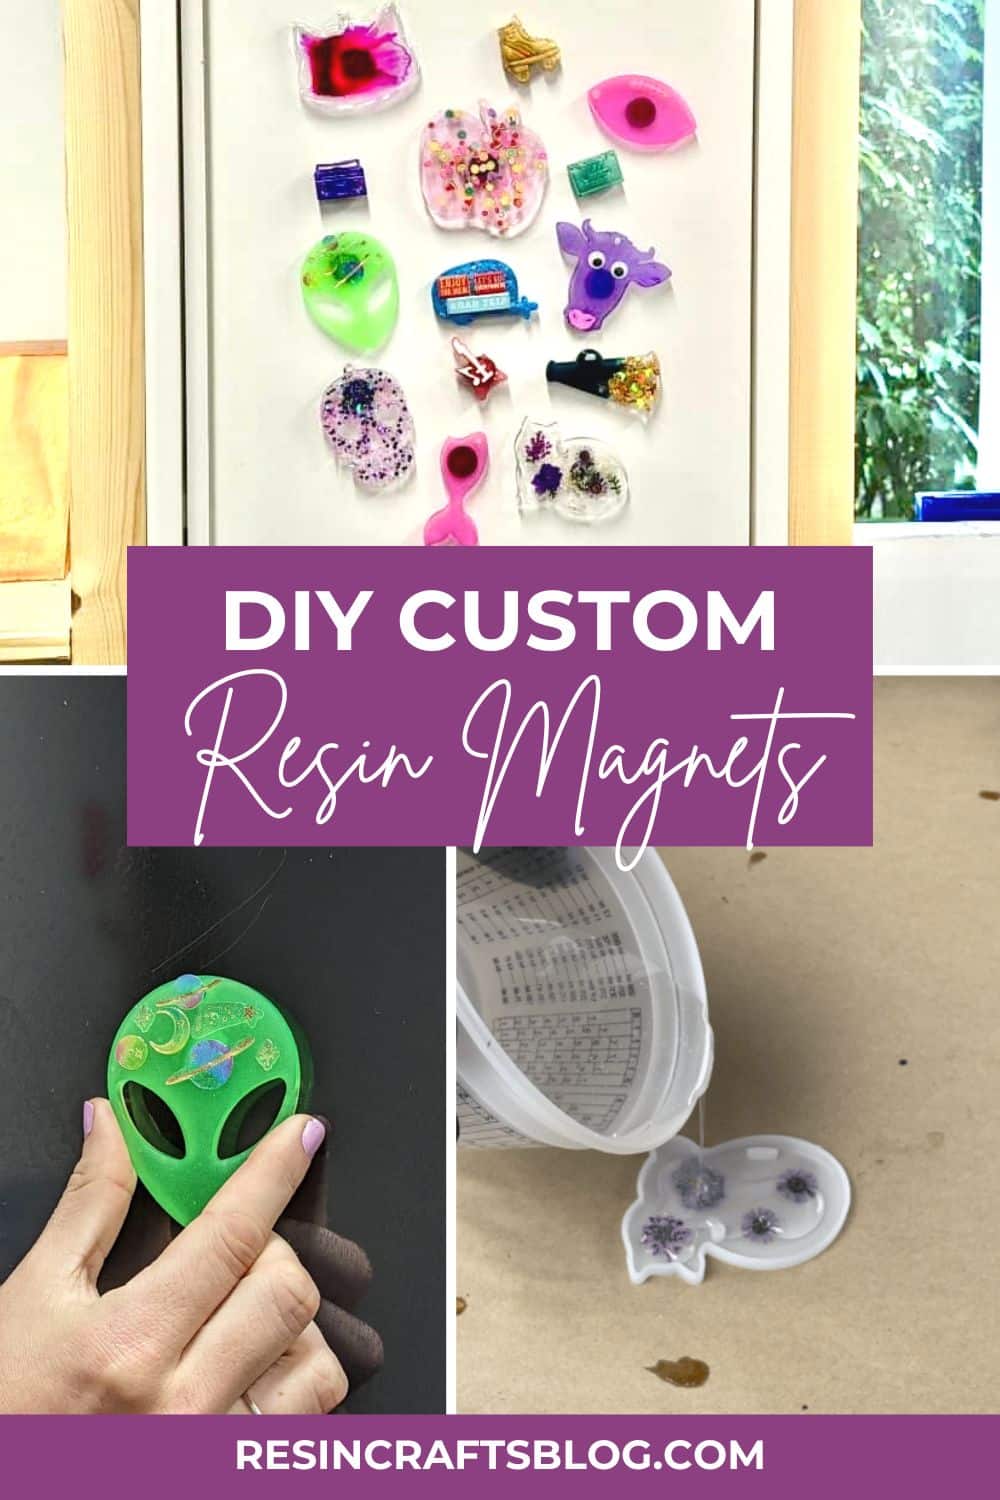 customized epoxy resin magnets via @resincraftsblog